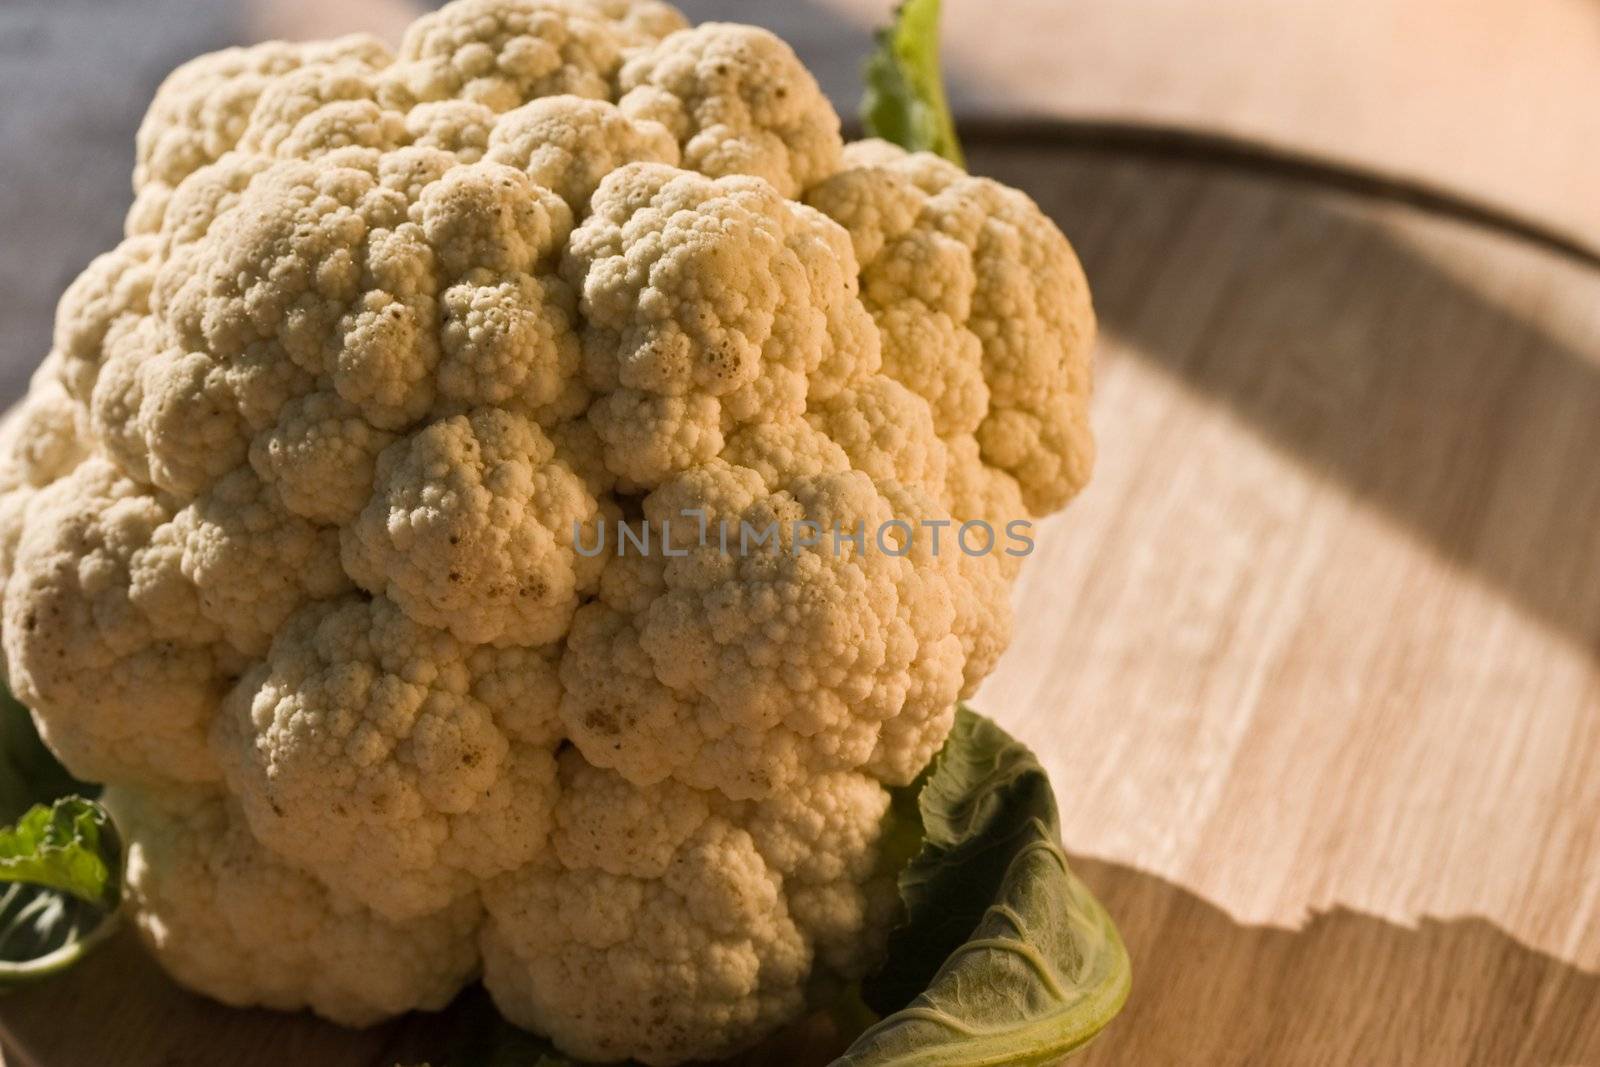 vegetable series: fresh and ripe cauliflower under sunlight